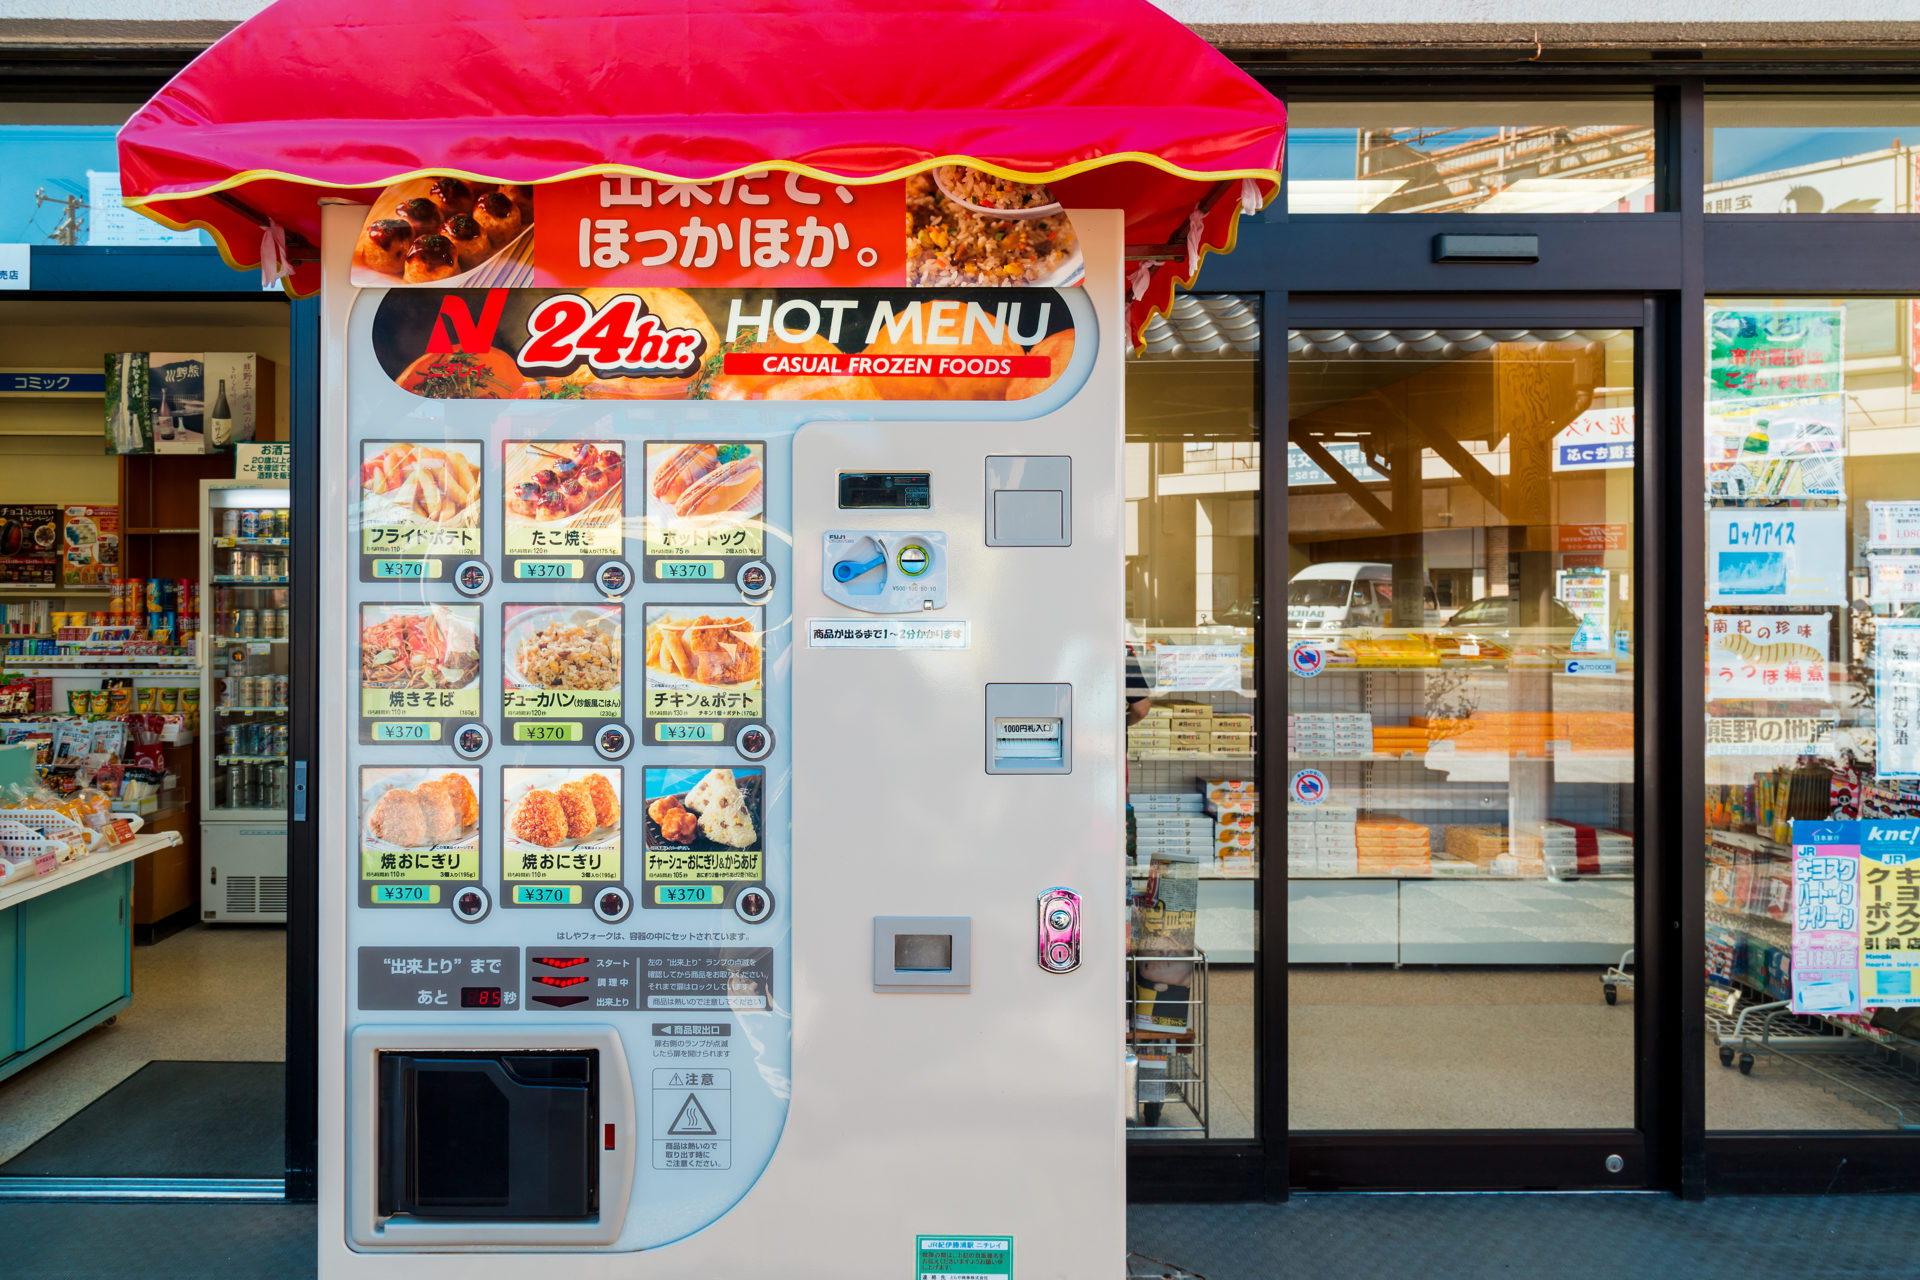 A vending machine dispensing hot meals in Japan (Photo: Shutterstock)